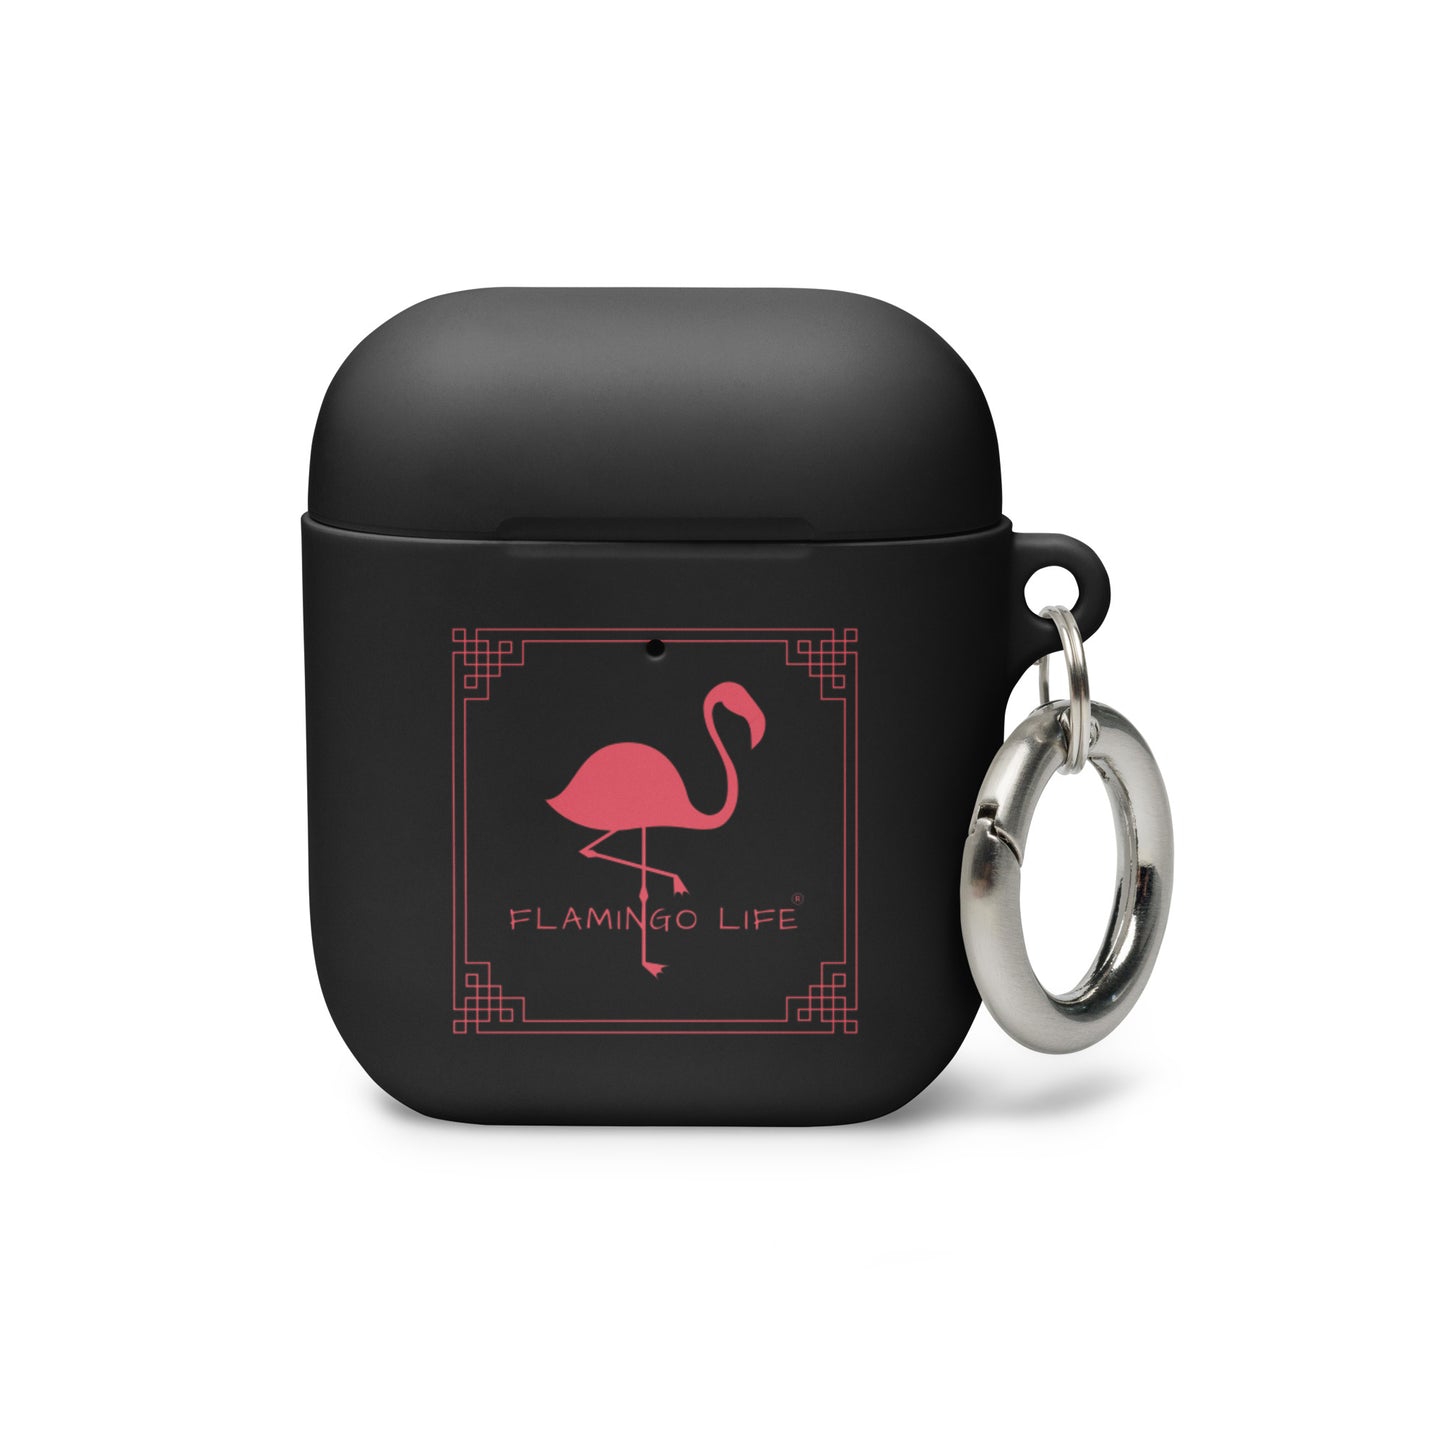 Flamingo Life® AirPods case